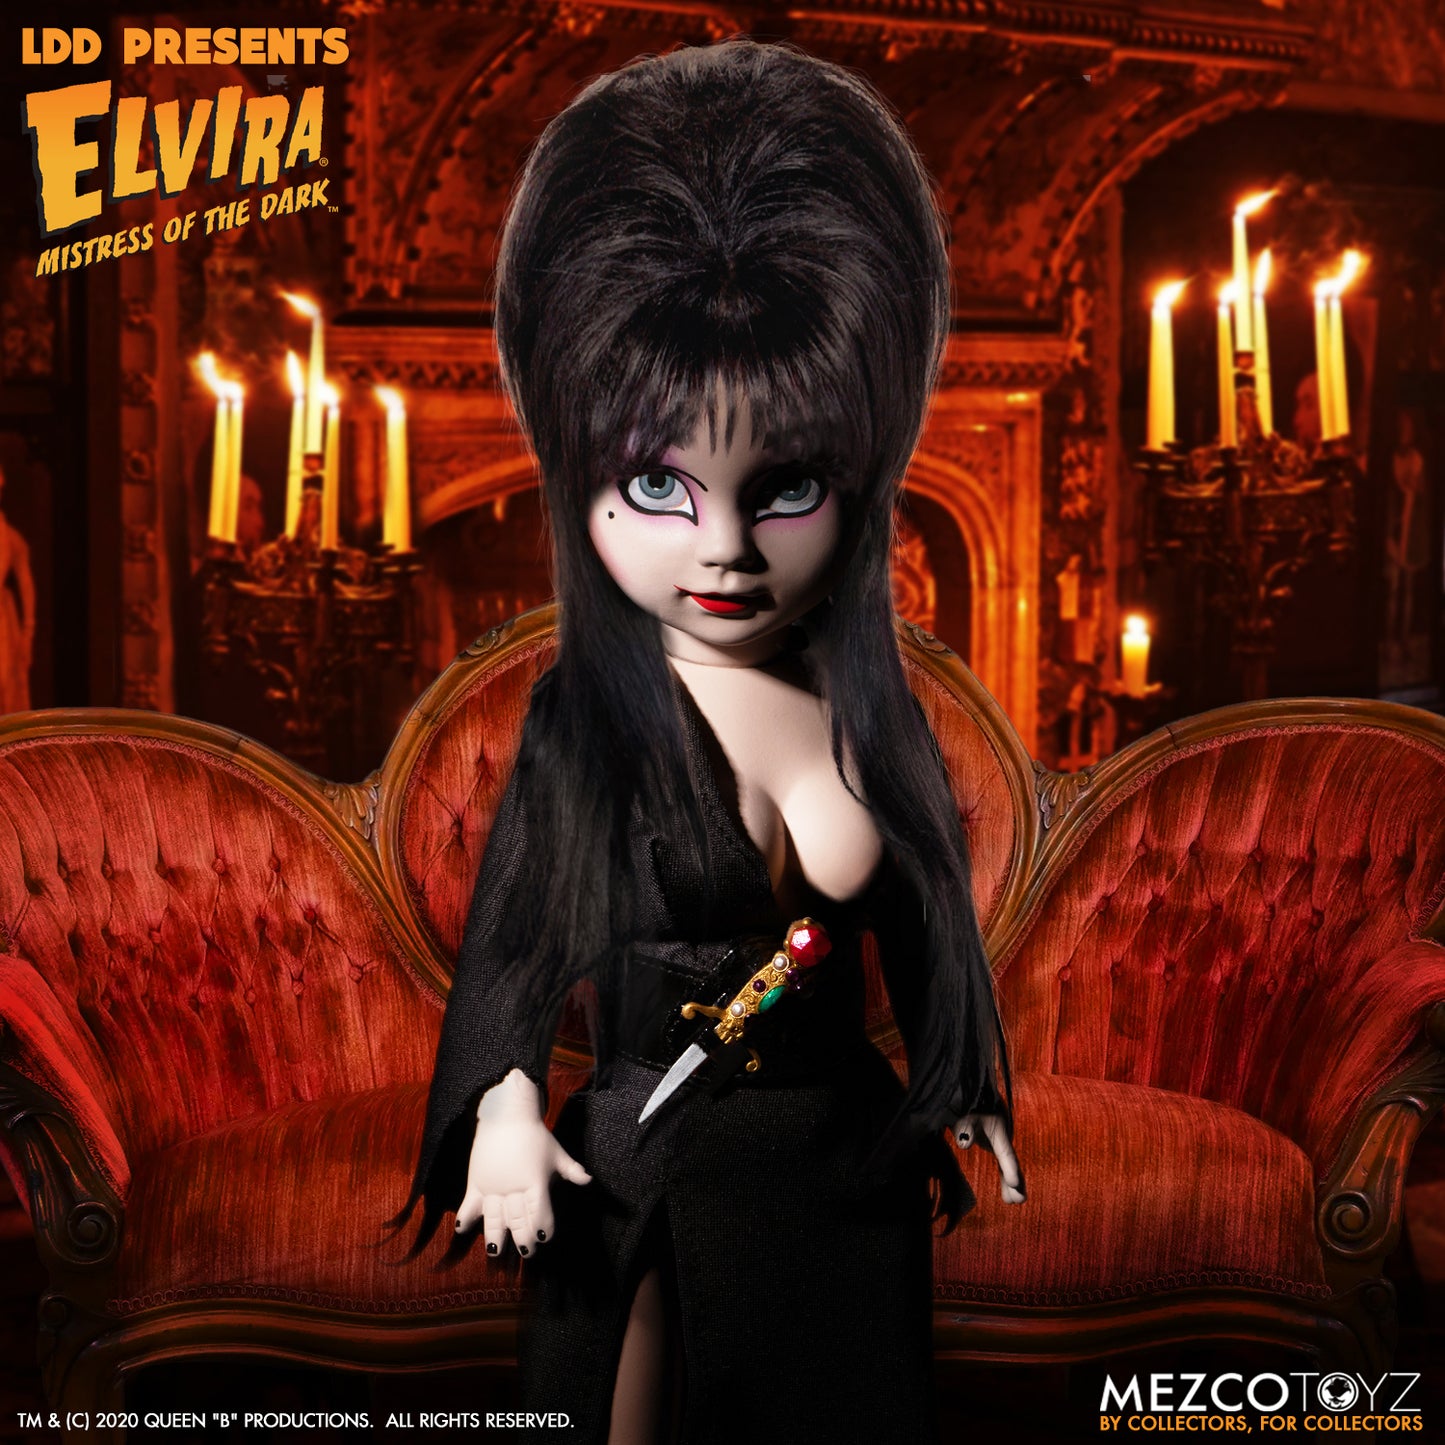 MEZCO TOYZ: LDD Presents - Elvira Mistress of the Dark 10" Tall Figure